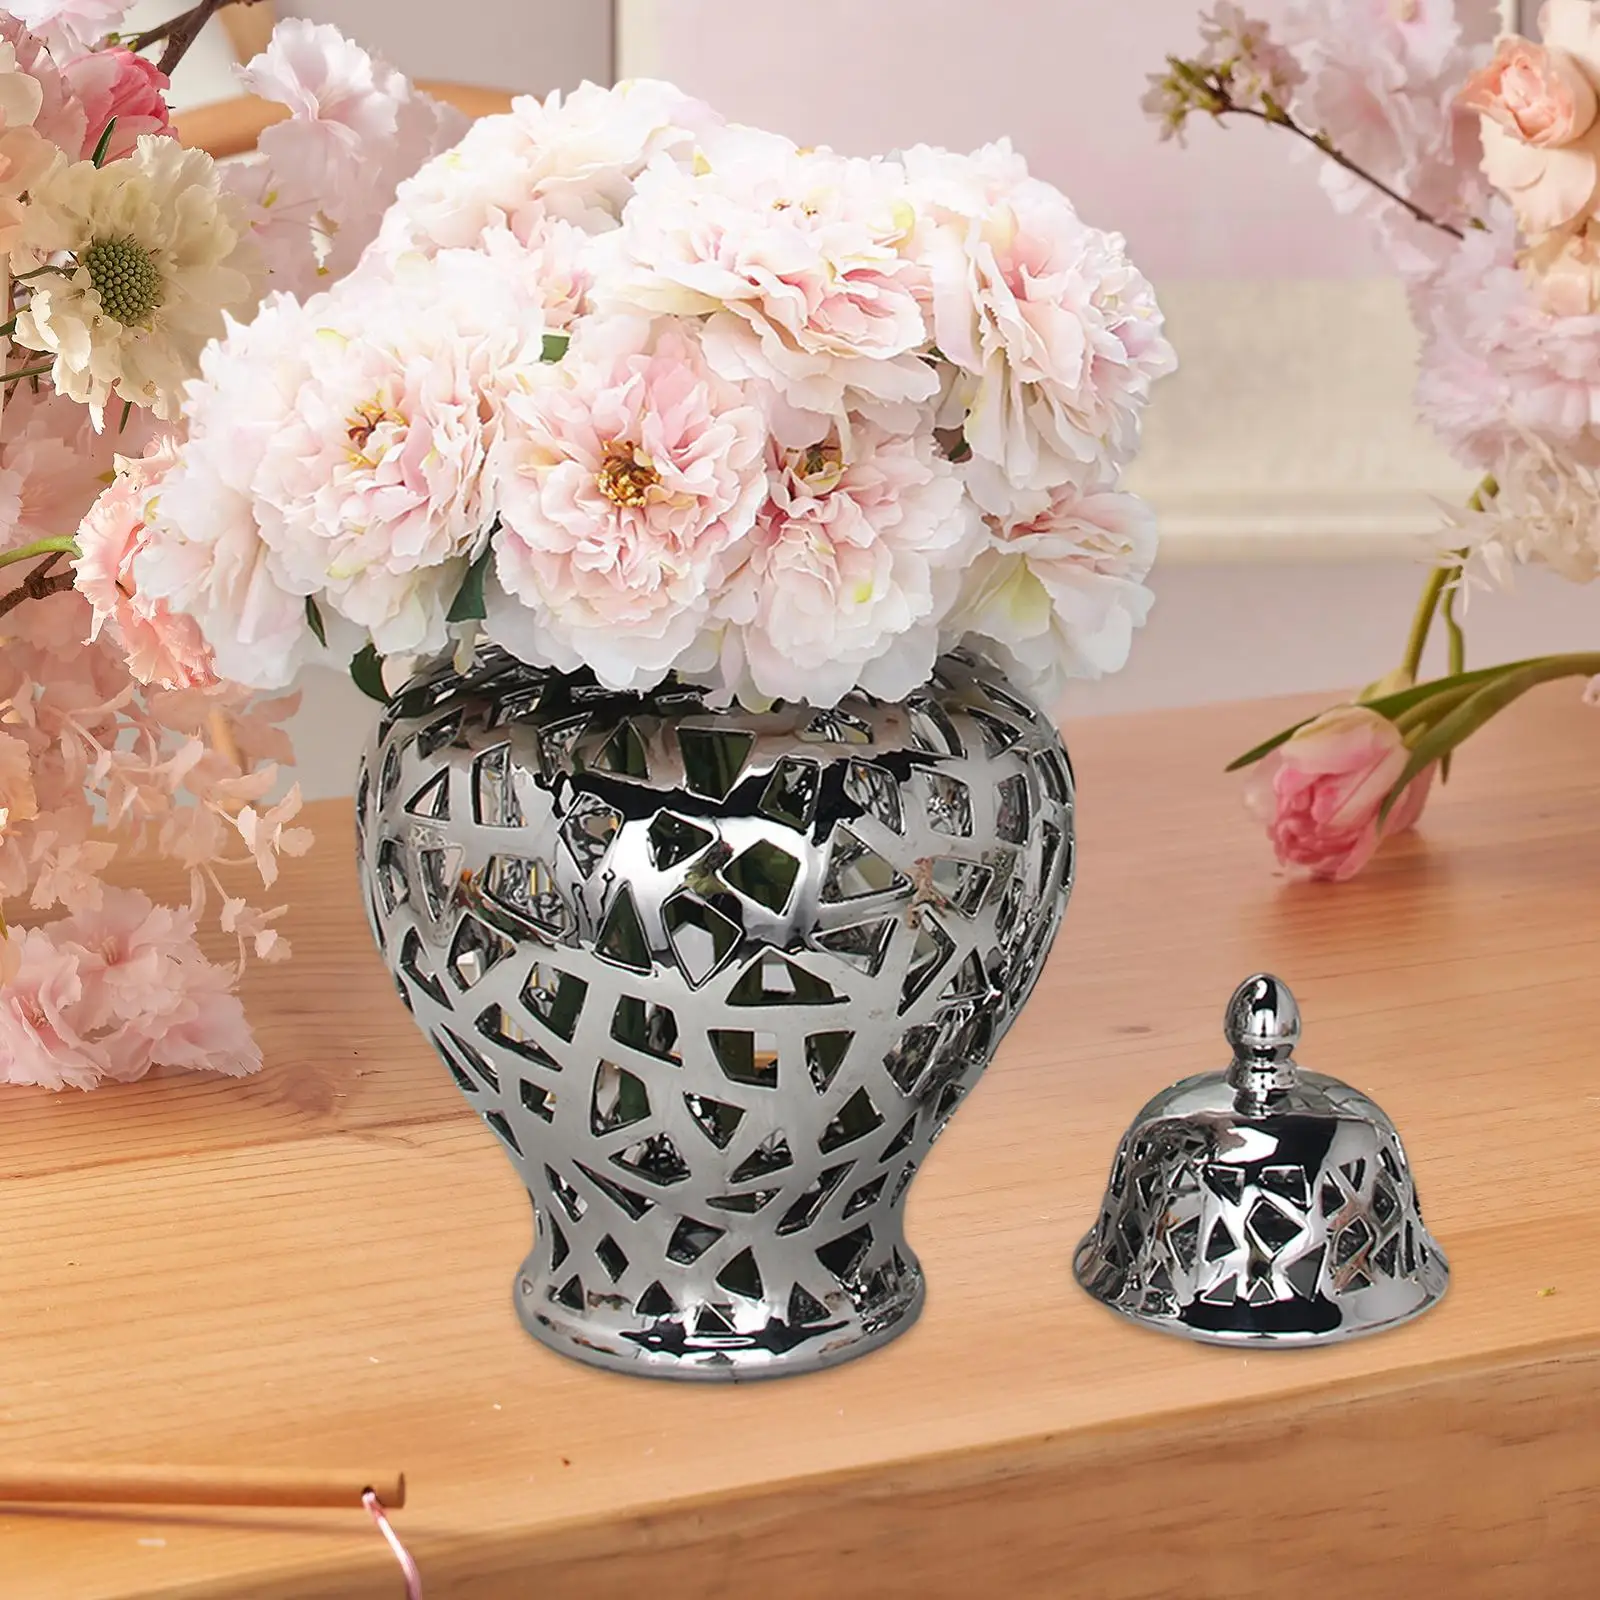 Porcelain Ginger Jar Ceramic Vase Collection Handicraft Table Centerpieces Decorative Vase for Wedding Party Home